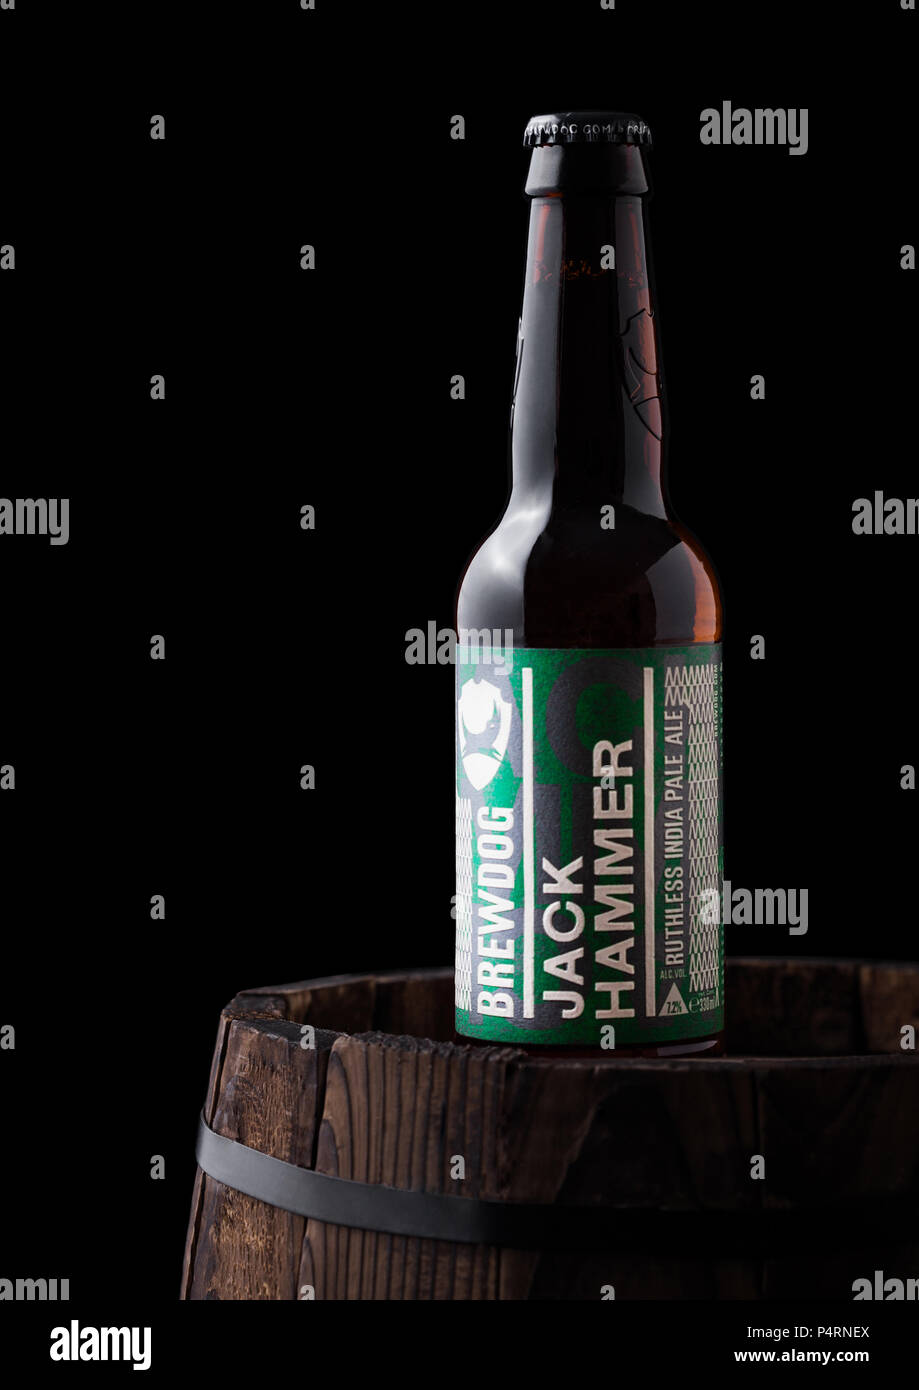 LONDON, UK - JUNE 06, 2018: Bottle of Jack Hammer indian pale ale beer, from the Brewdog brewery on old wooden barrel on black background. Stock Photo